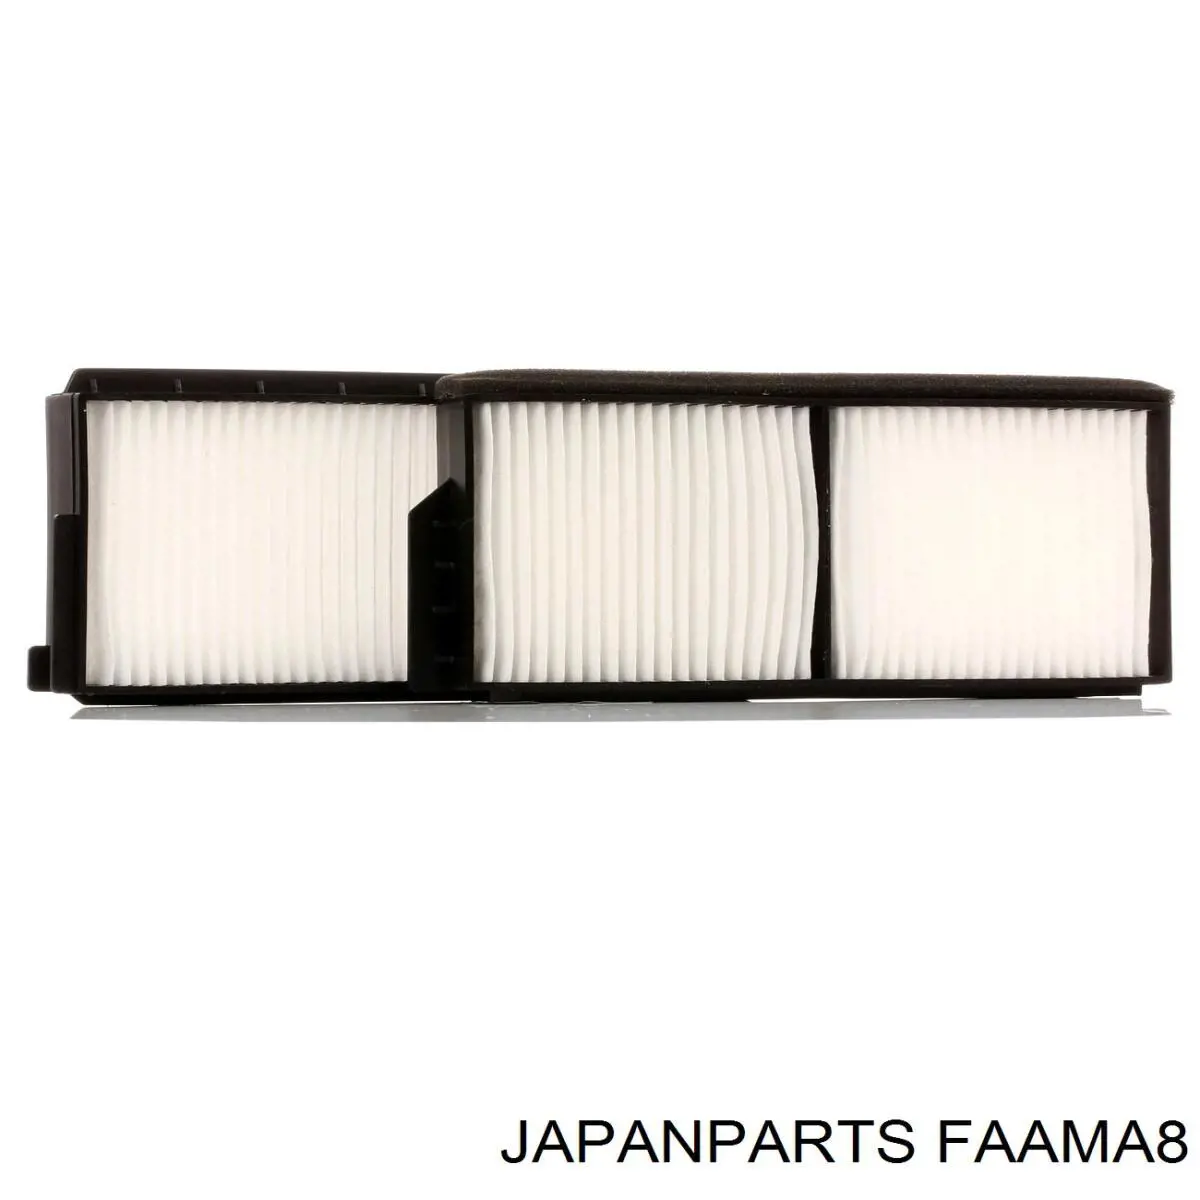 FAA-MA8 Japan Parts фильтр салона